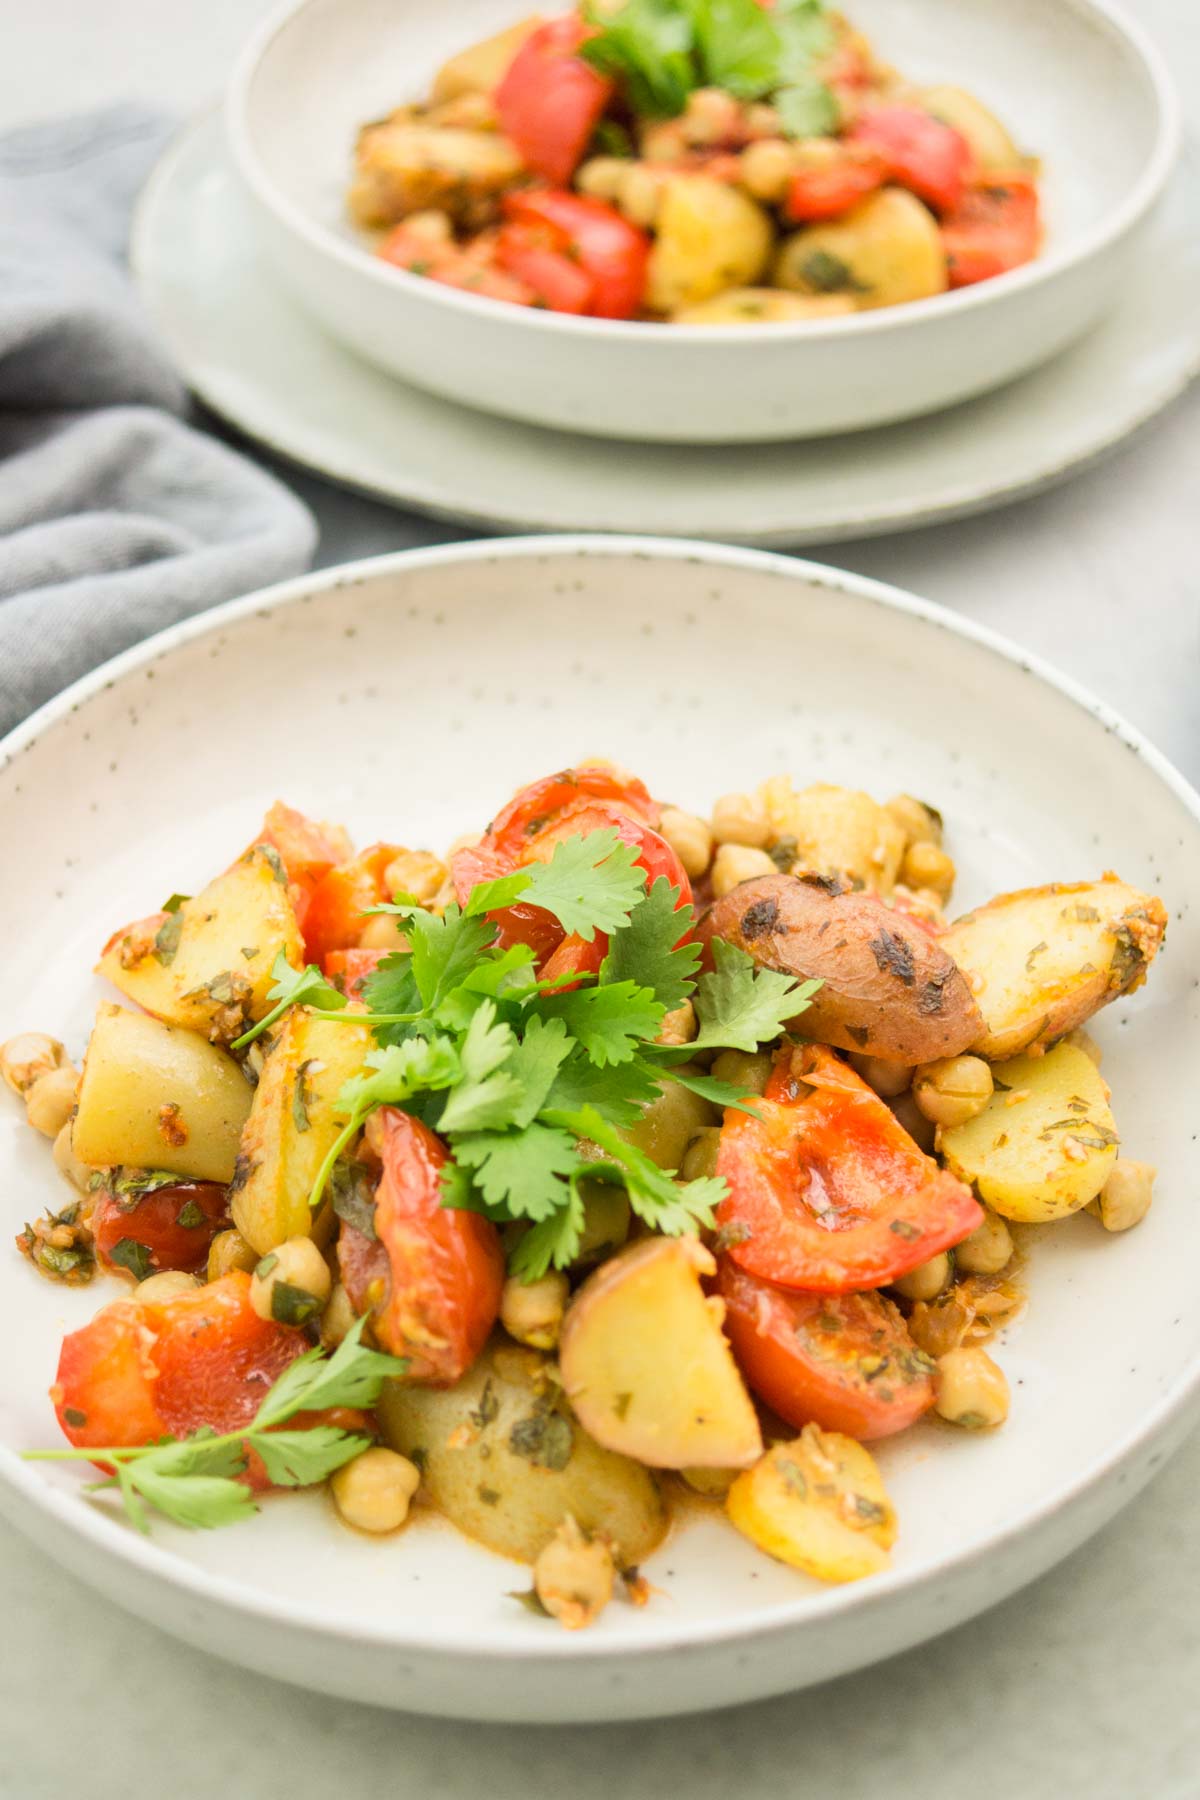 würziges Kartoffel-Tajine mit KicheSpiced Potato Tagine with Chickpeas, Tomatoes and Red Pepper